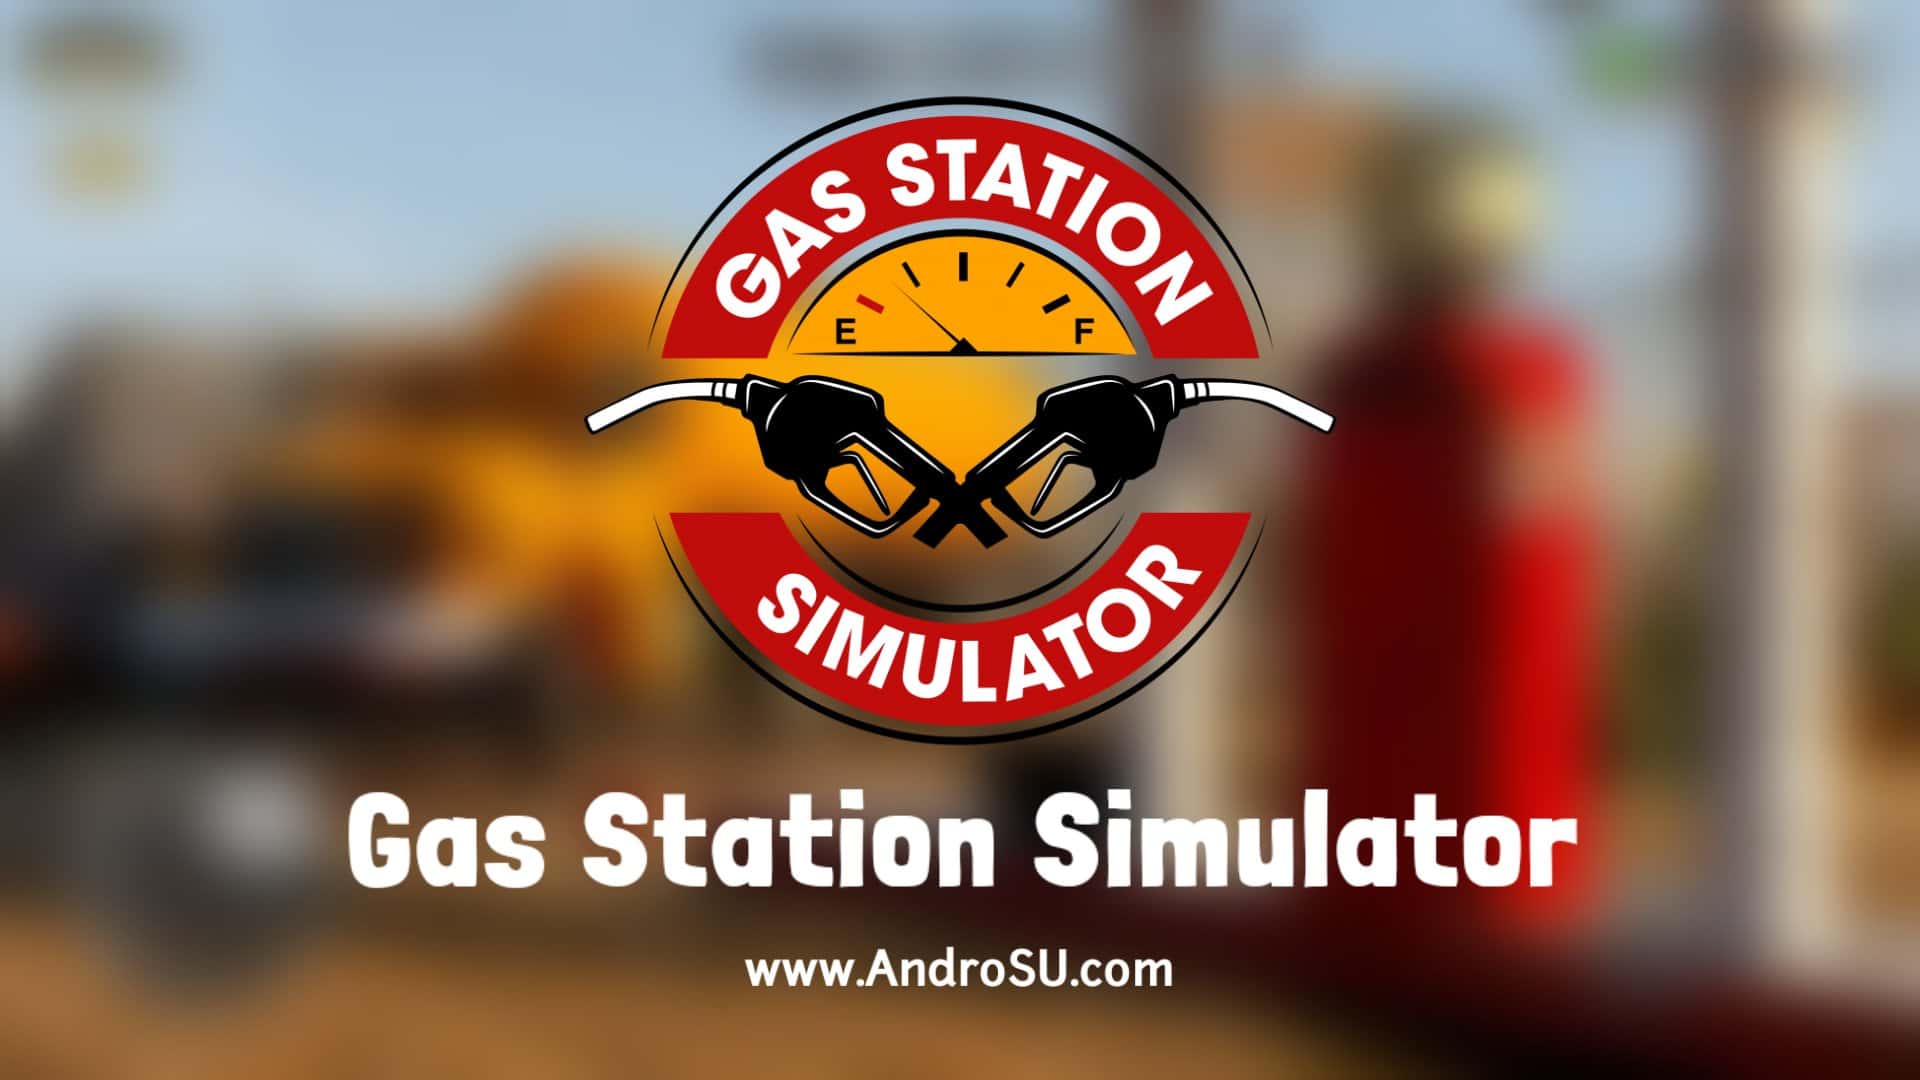 Gas Station Simulator APK, Gas Station Junkyard Simulator APK, Gas Station Simulator Android